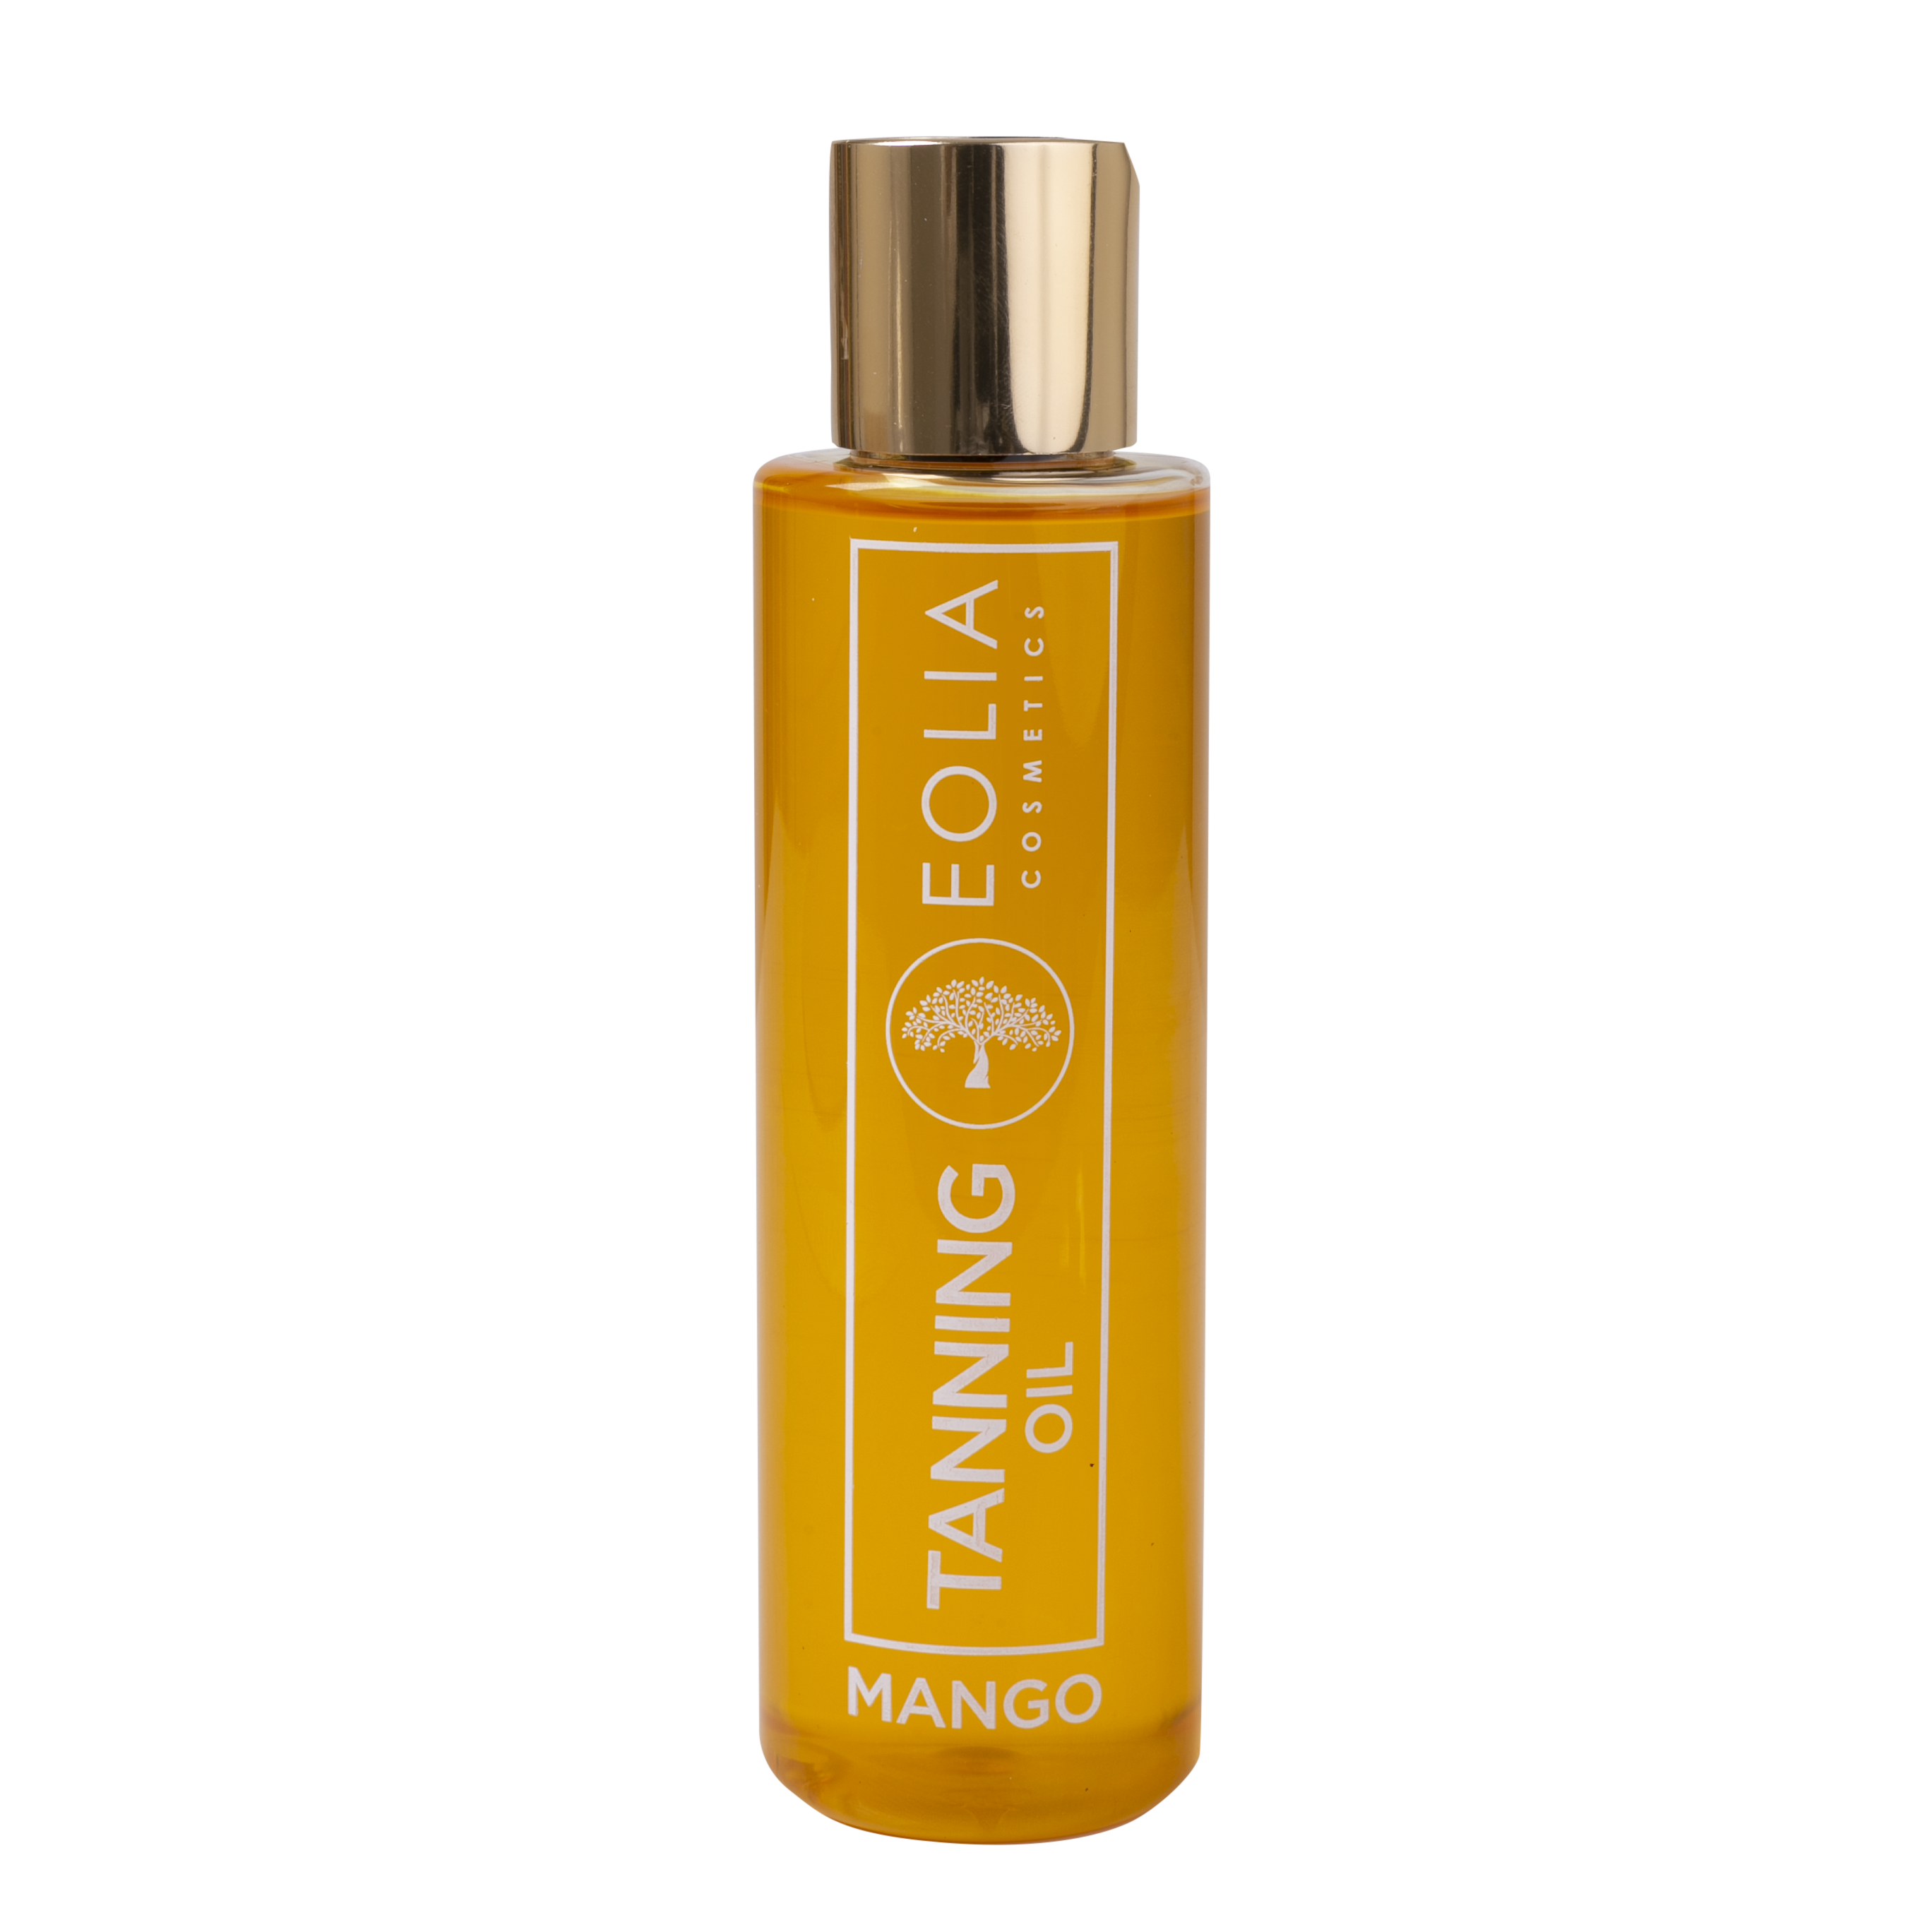 Eolia Body oil mango